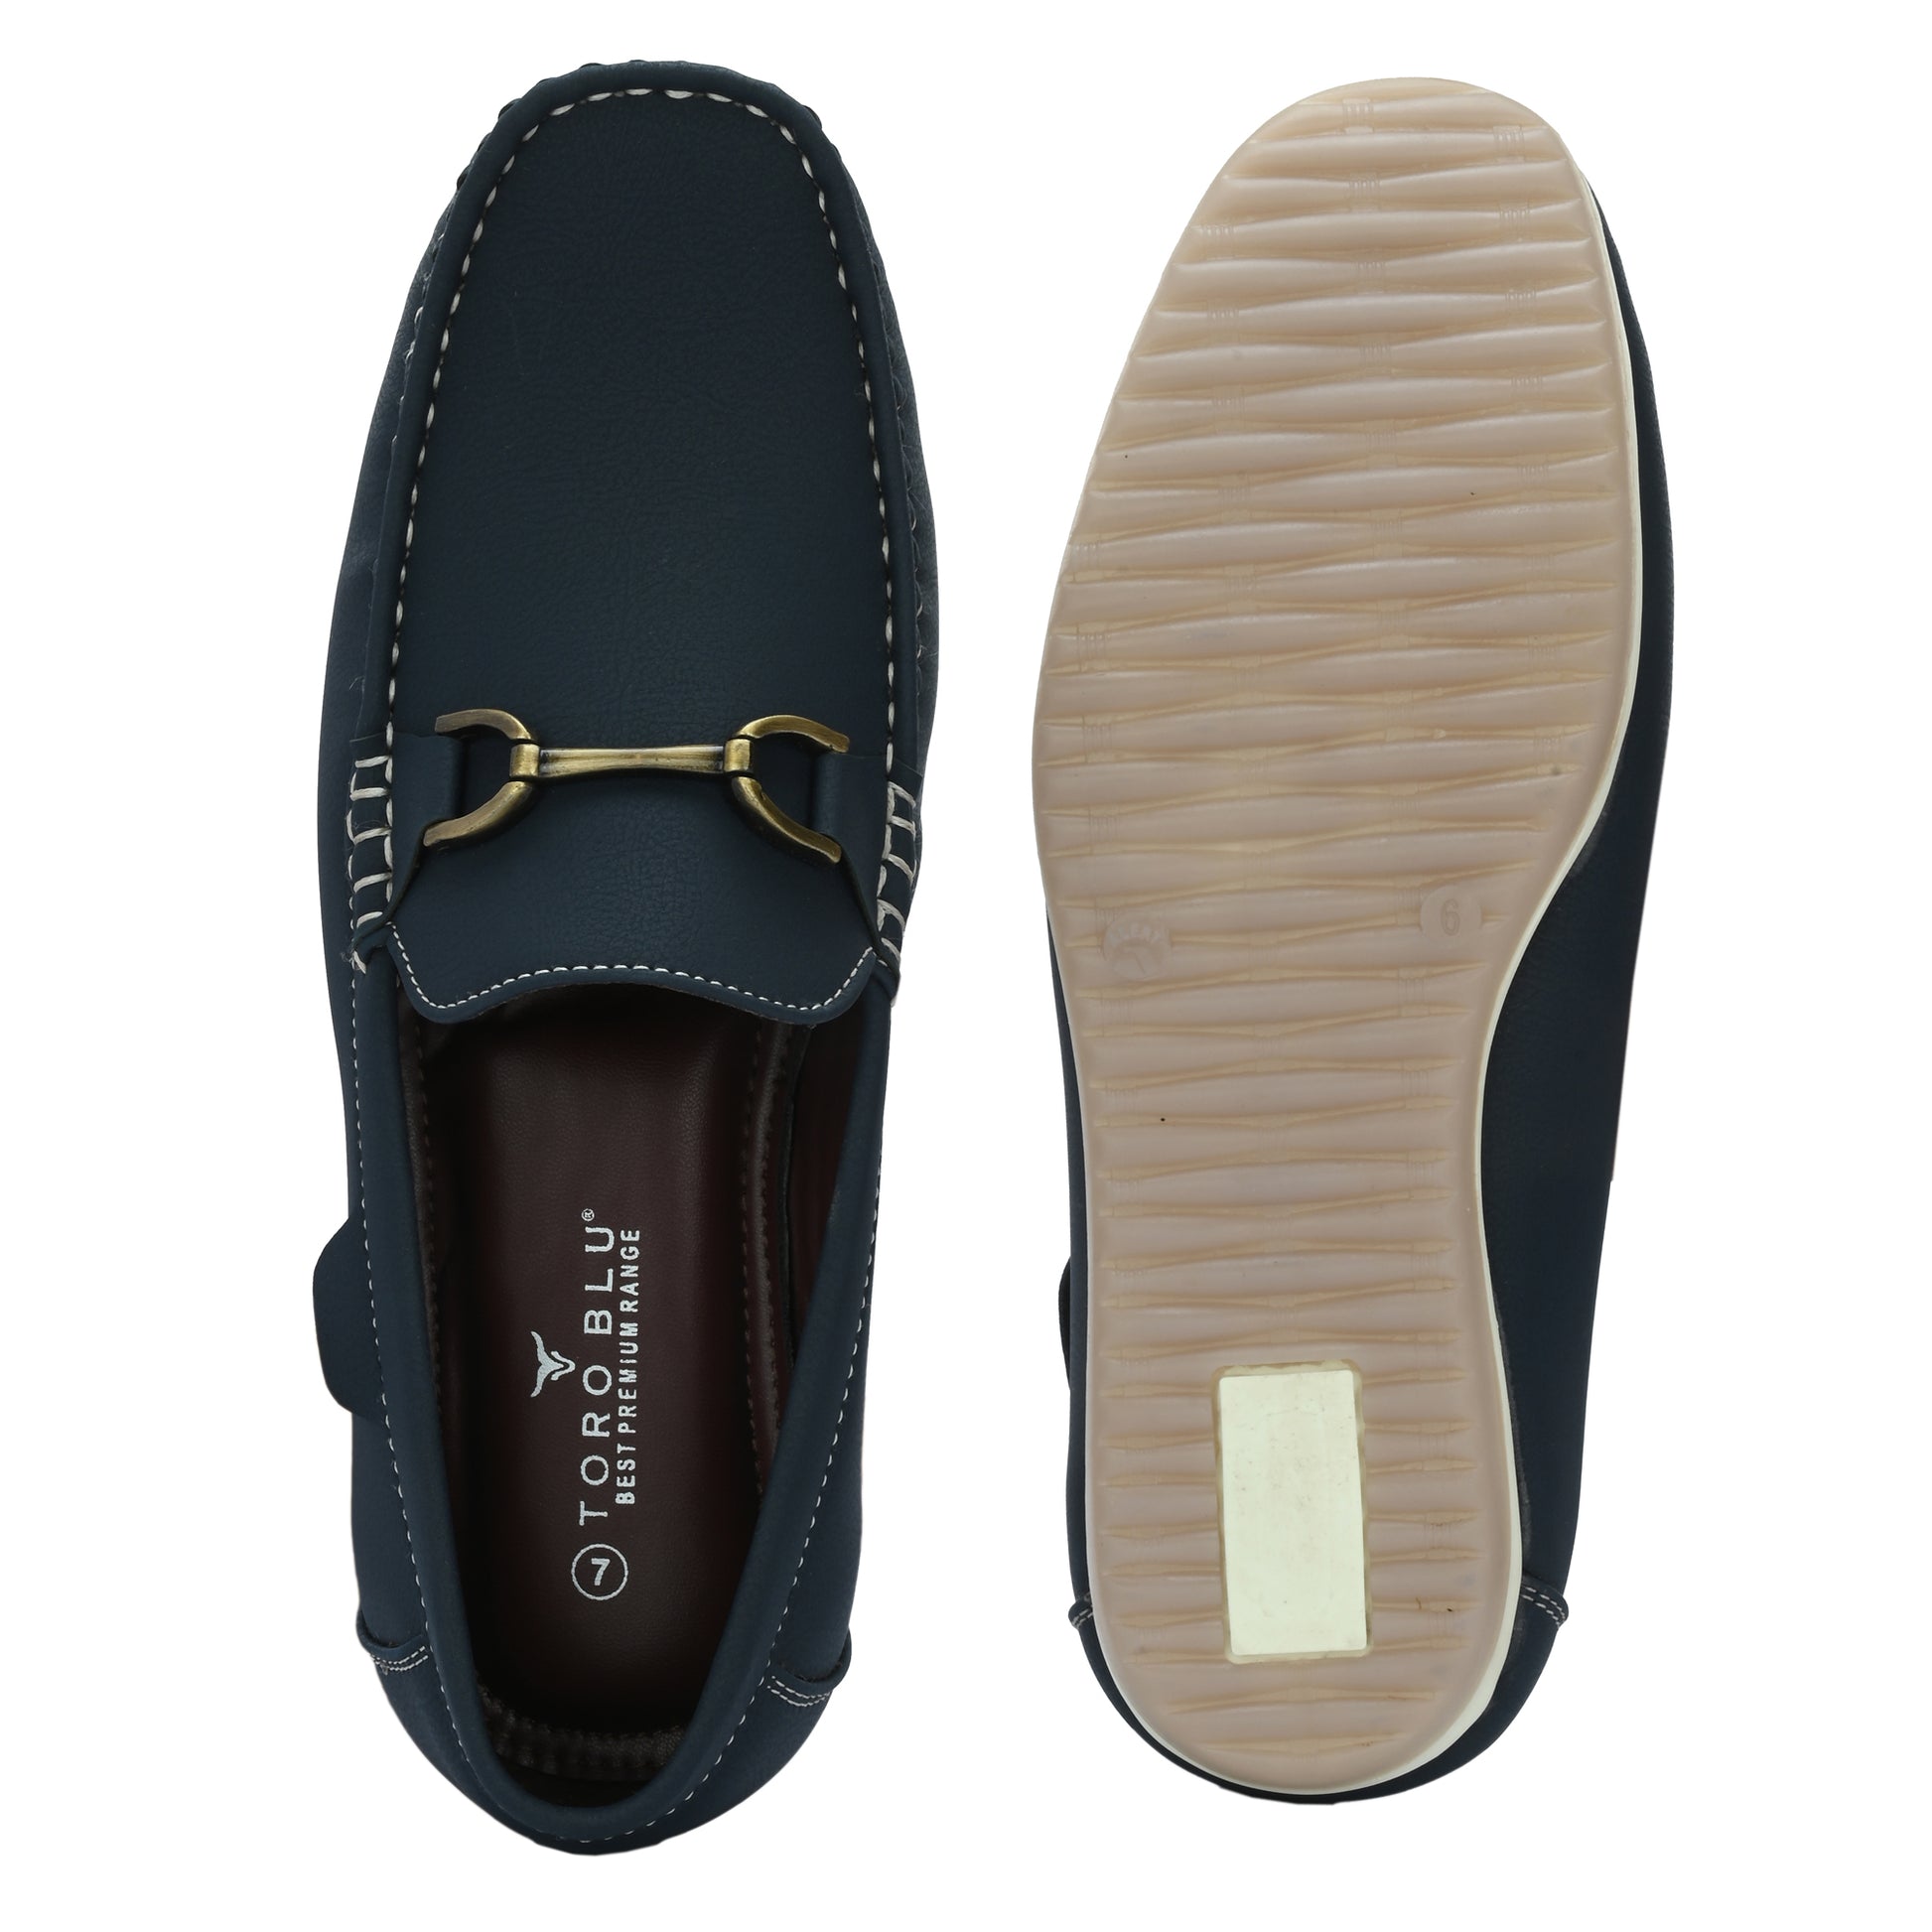 HNR Corporation Copy of Toro Blu Men's Leather Loafers Shoes HNR Corporation 999.00 Toro Blu  Copy of Toro Blu Men's Leather Loafers Shoes